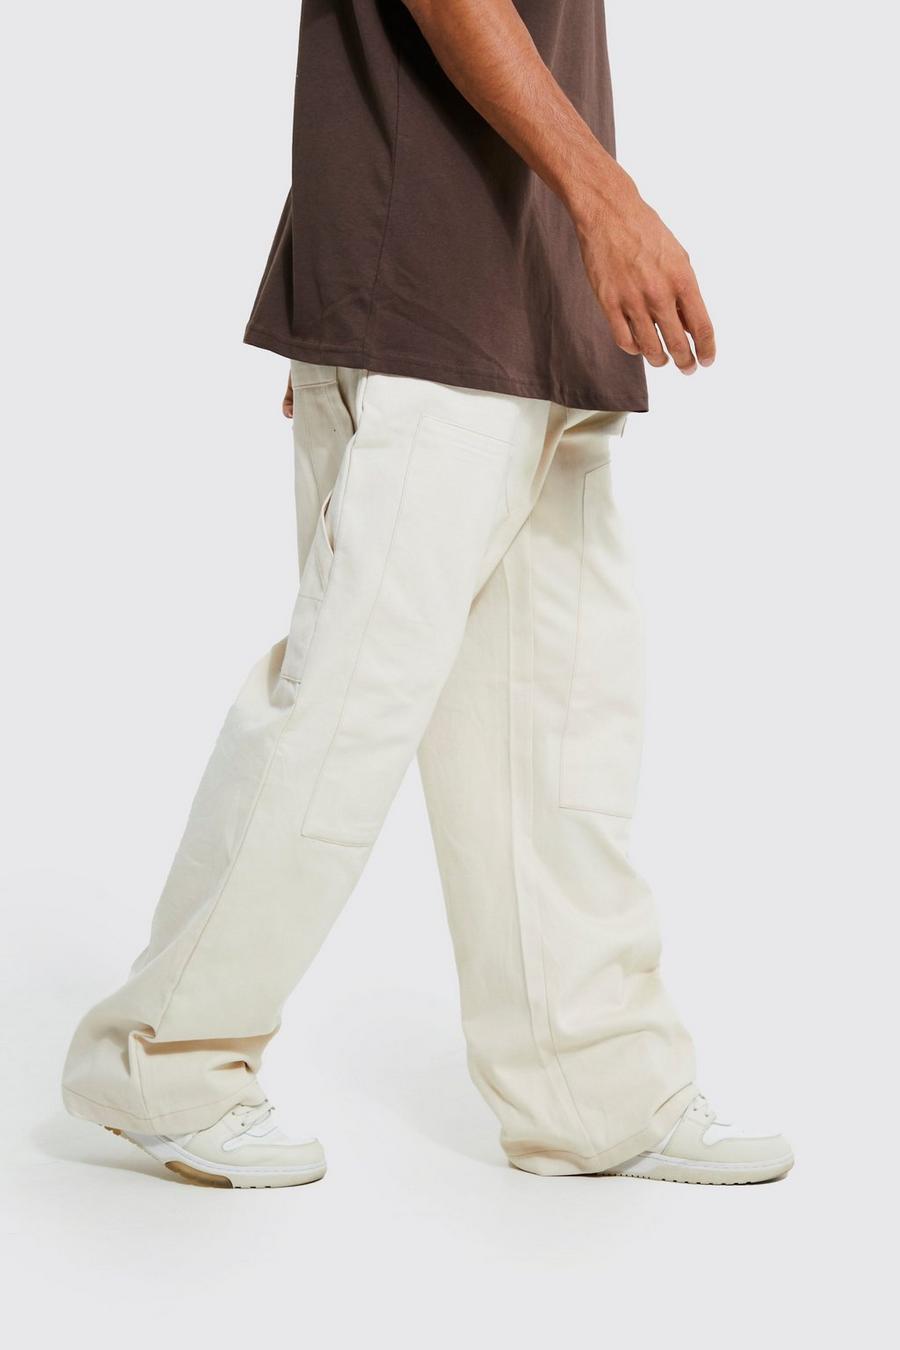 Pantalón Tall ancho grueso estilo obrero, Ecru blanco image number 1